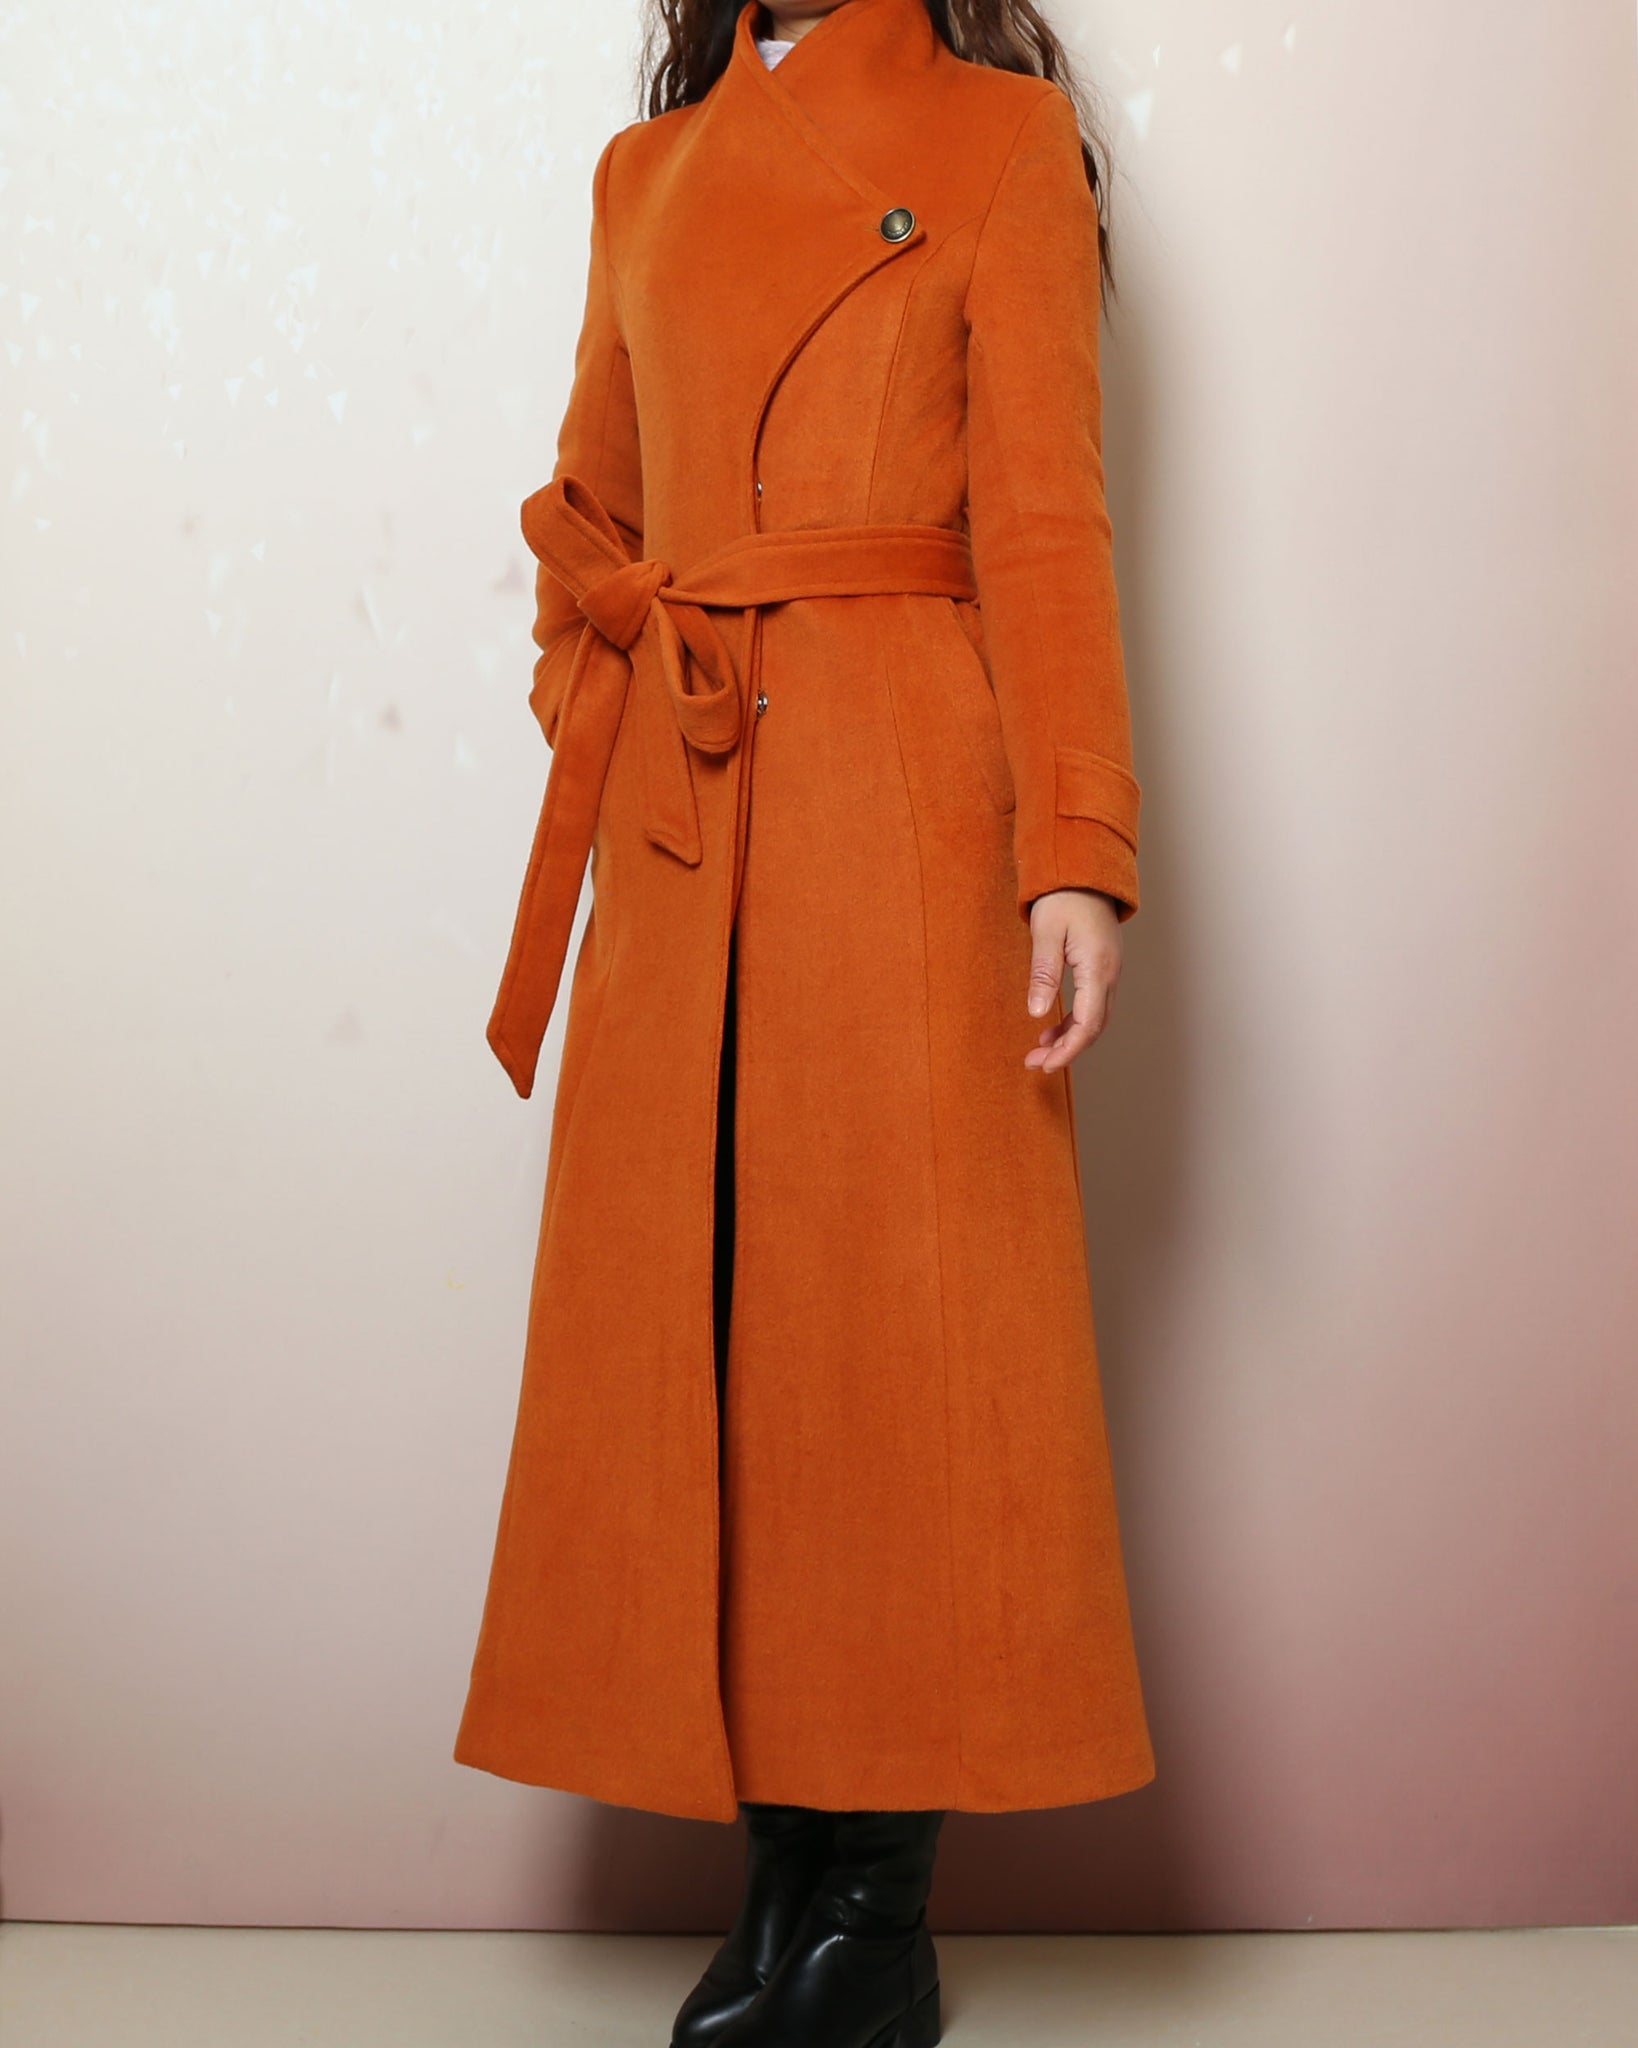 Winter coat, Long wool coat, black coat dress, flare coat, buttoned ja –  lijingshop